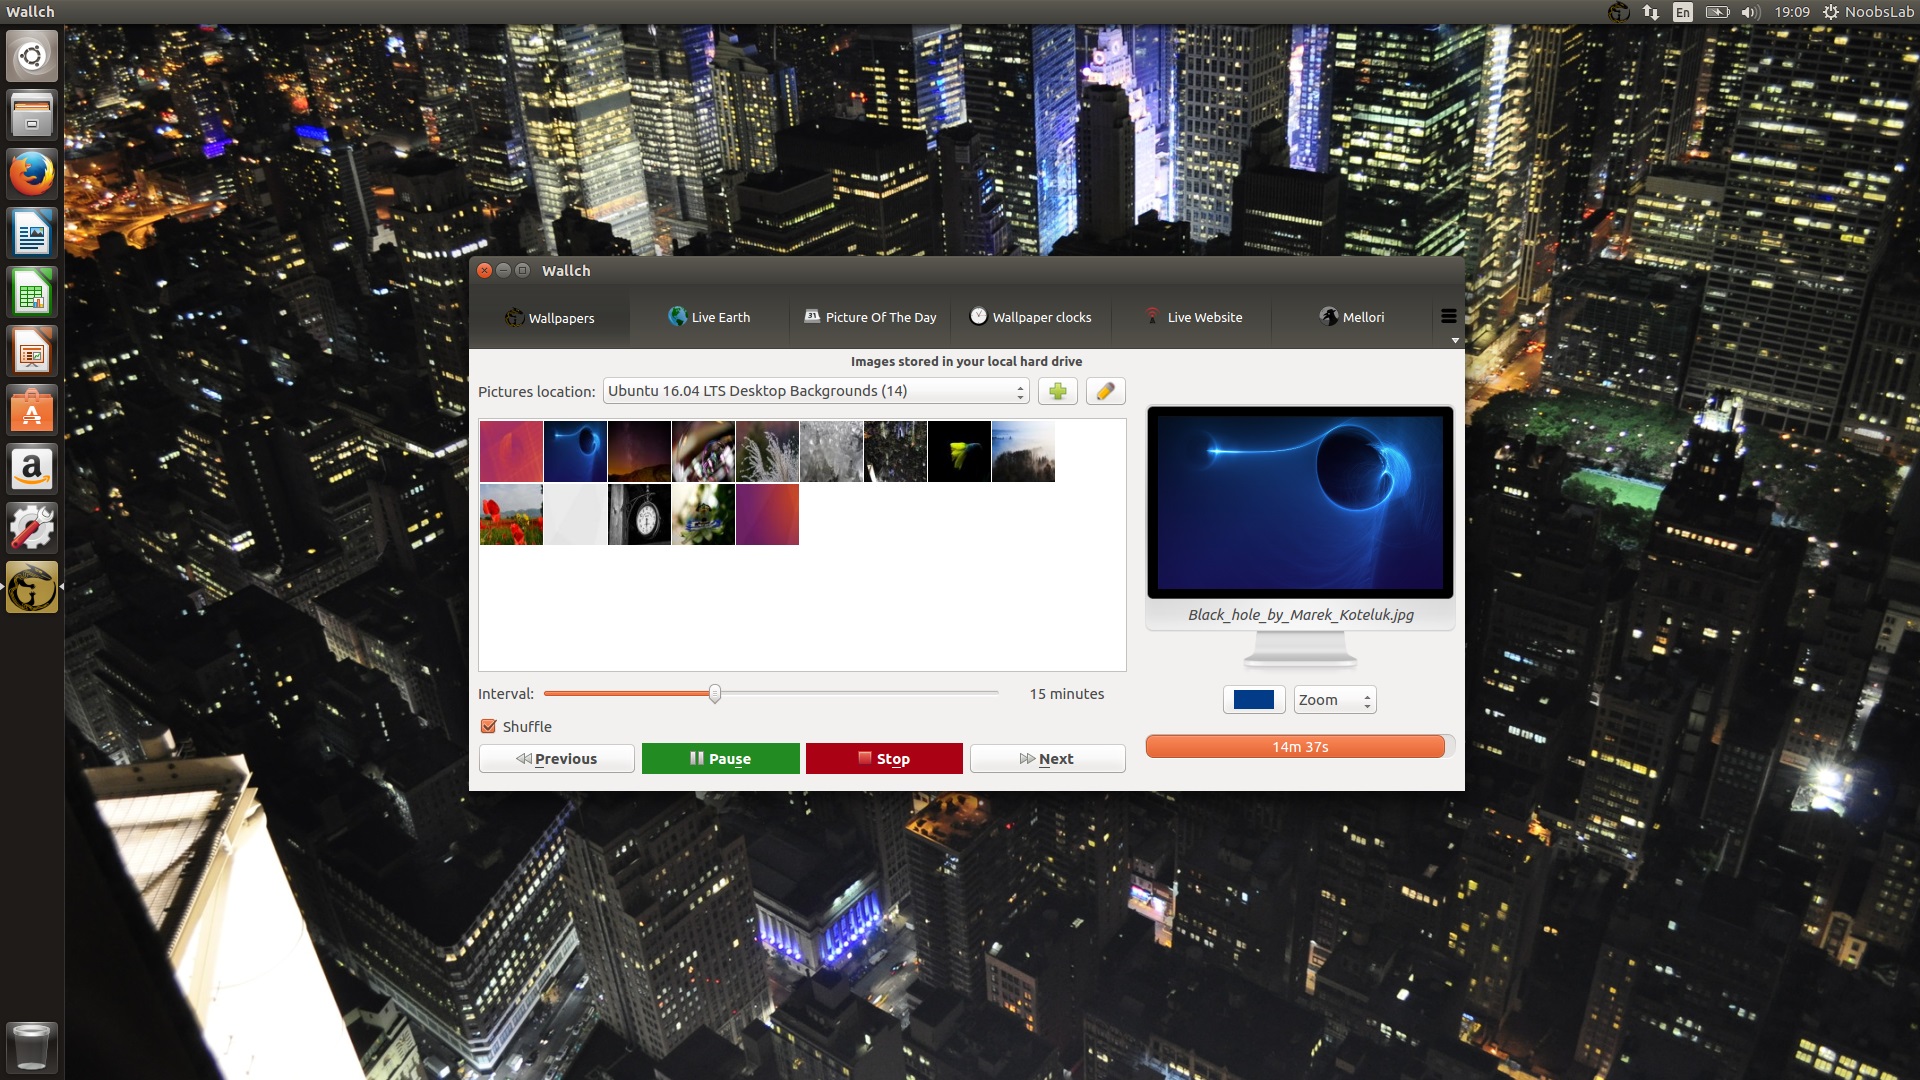 Wallch 4: Wallpaper Manager (Live Clock) for Ubuntu/Linux Mint via PPA -  NoobsLab | Eye on Digital World